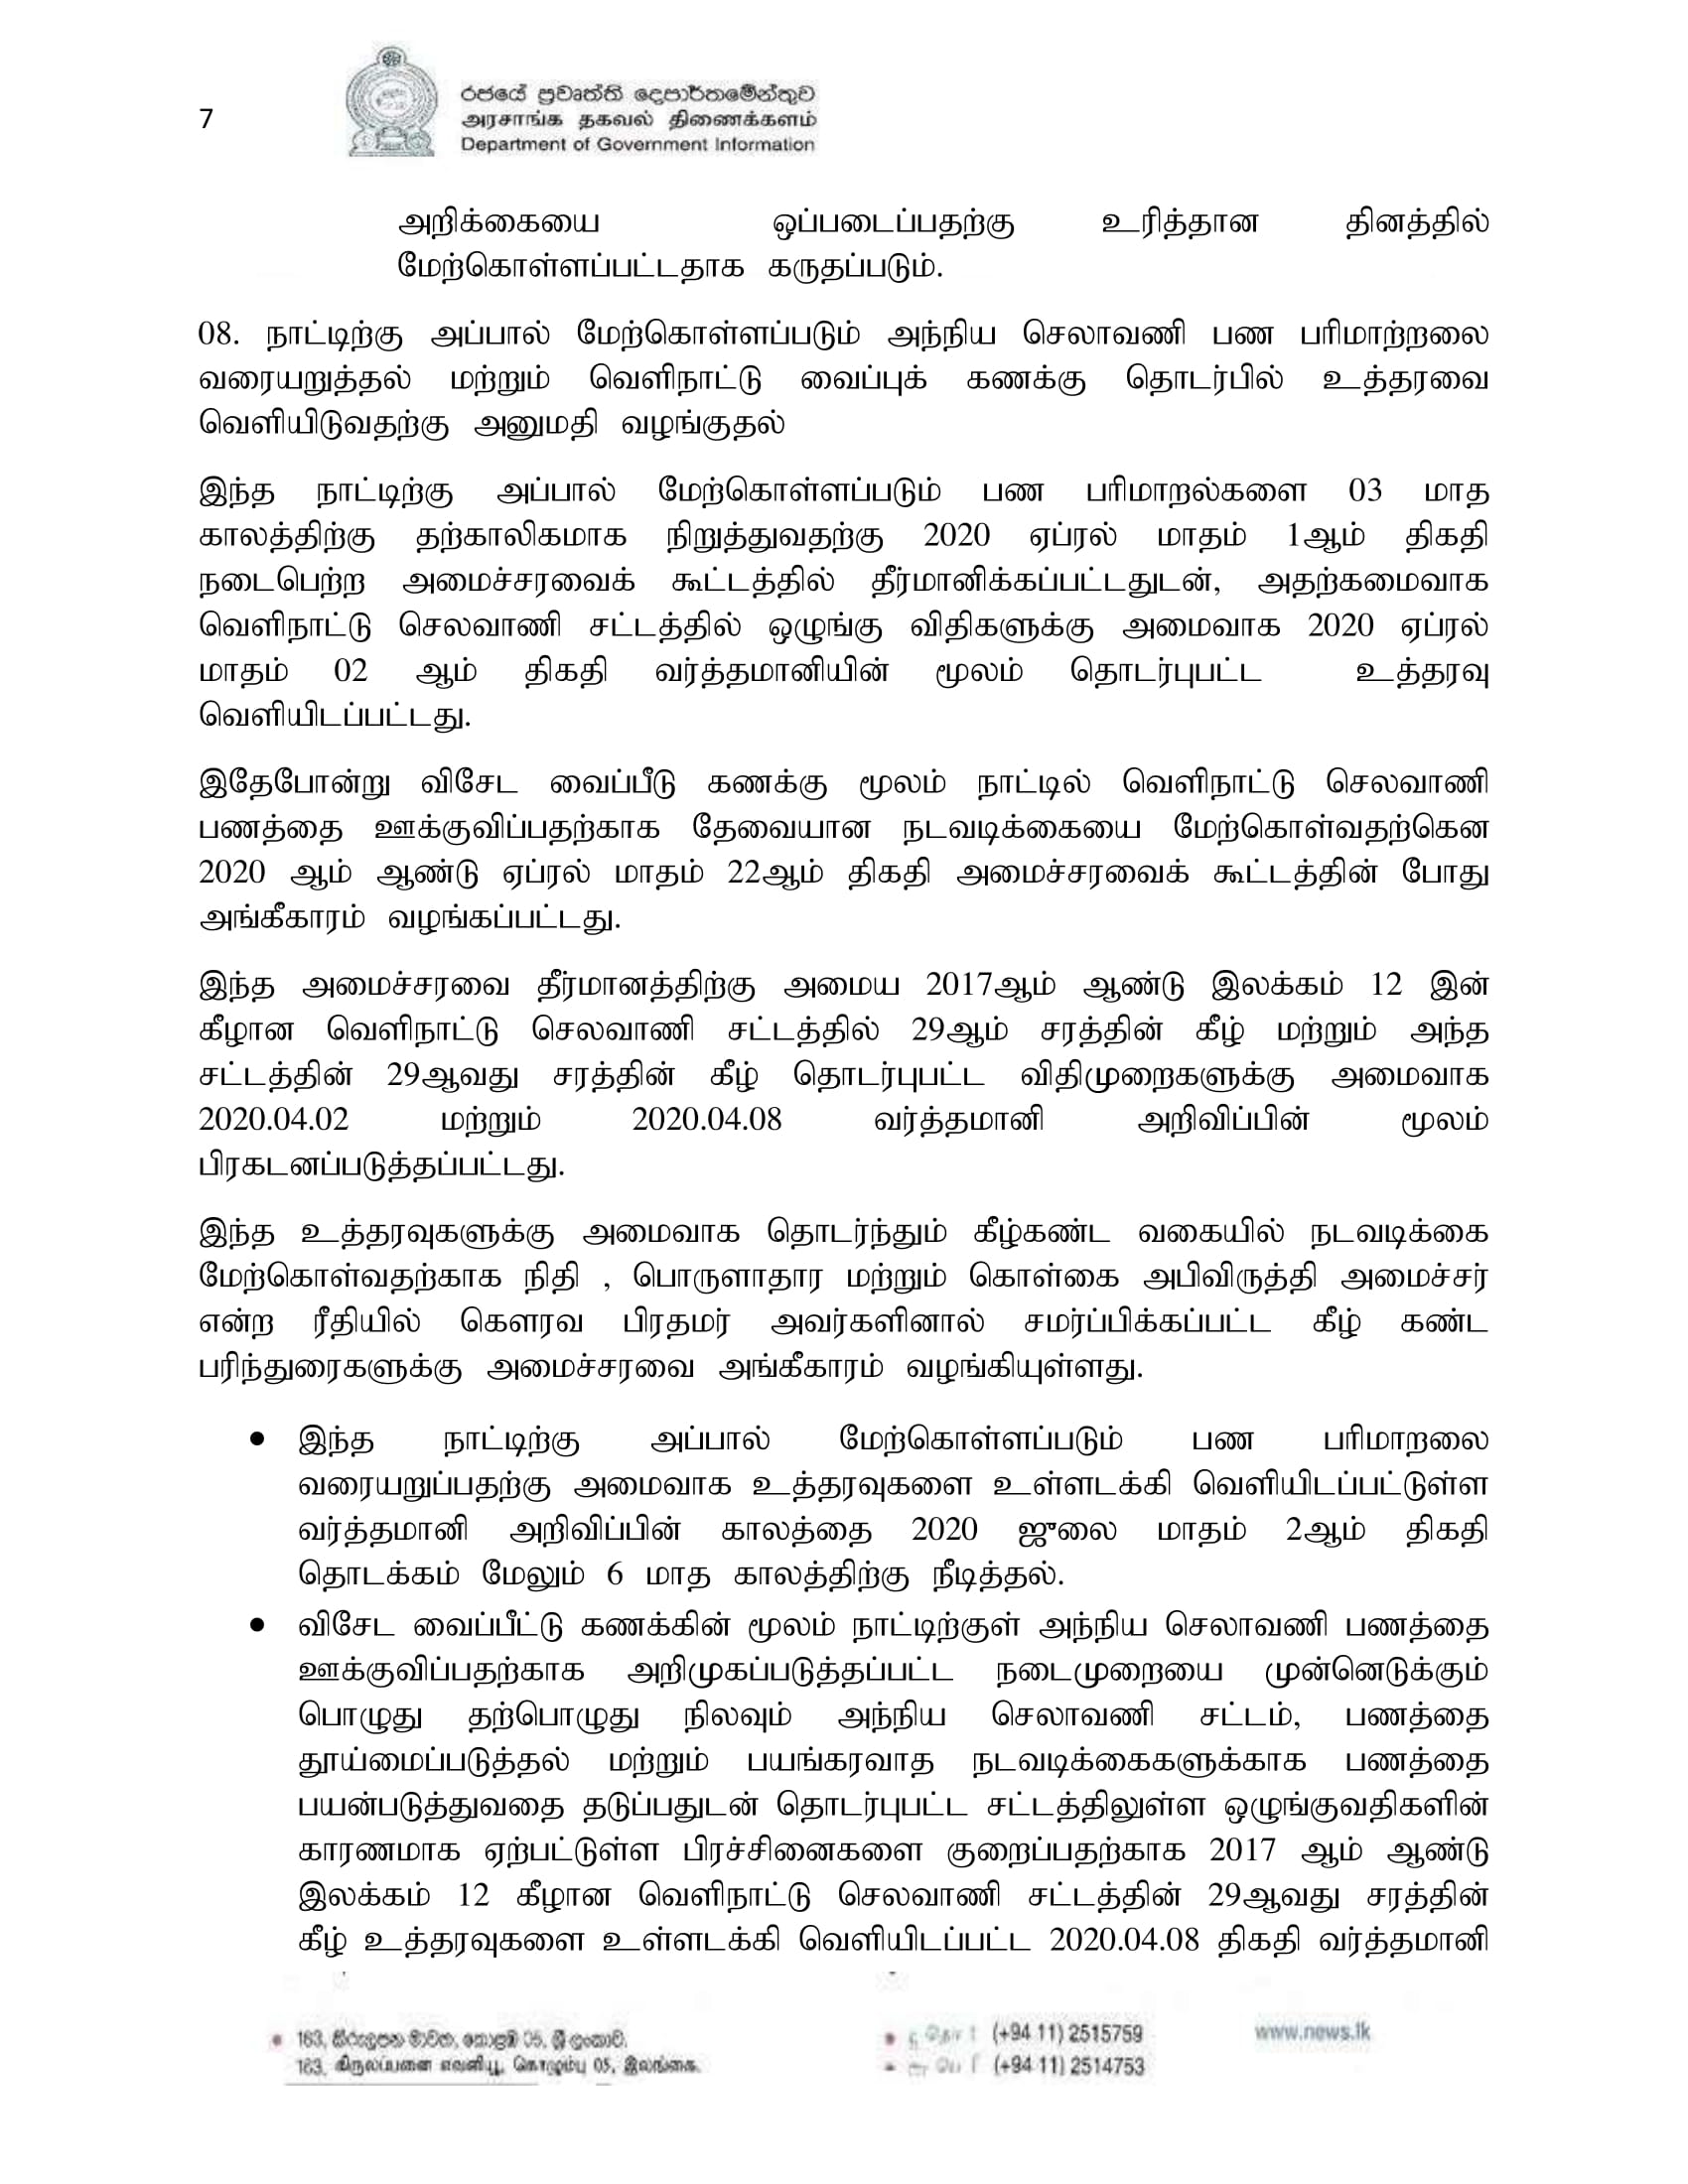 2020.06.24 Cabinet Tamil 1 1 7